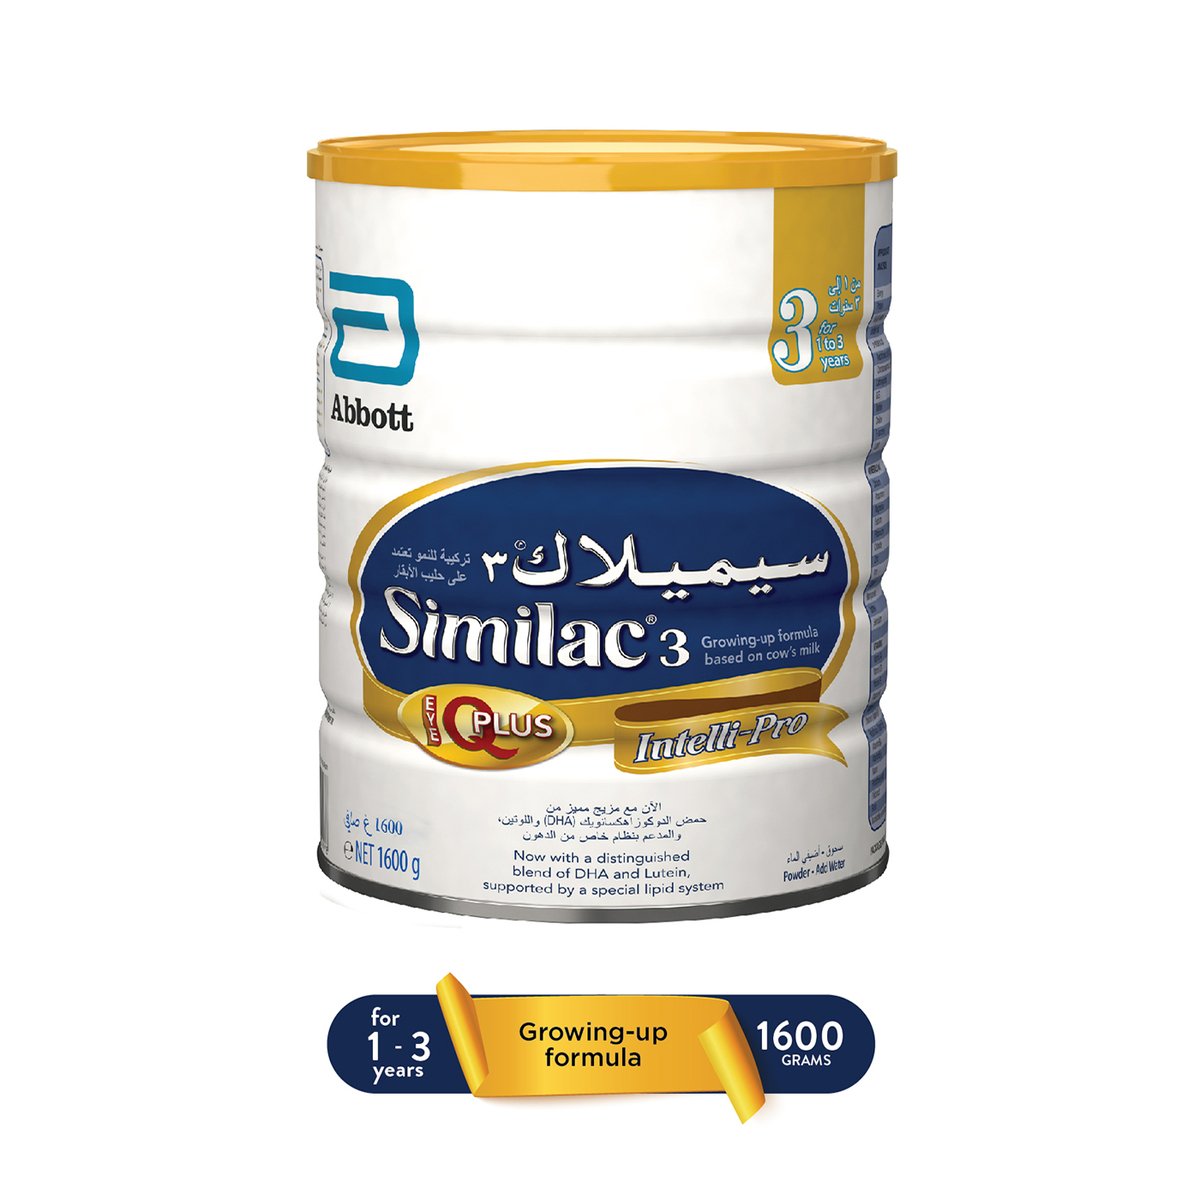 Similac Total Comfort 3 Growing Up Formula Milk (1-3y) 820g